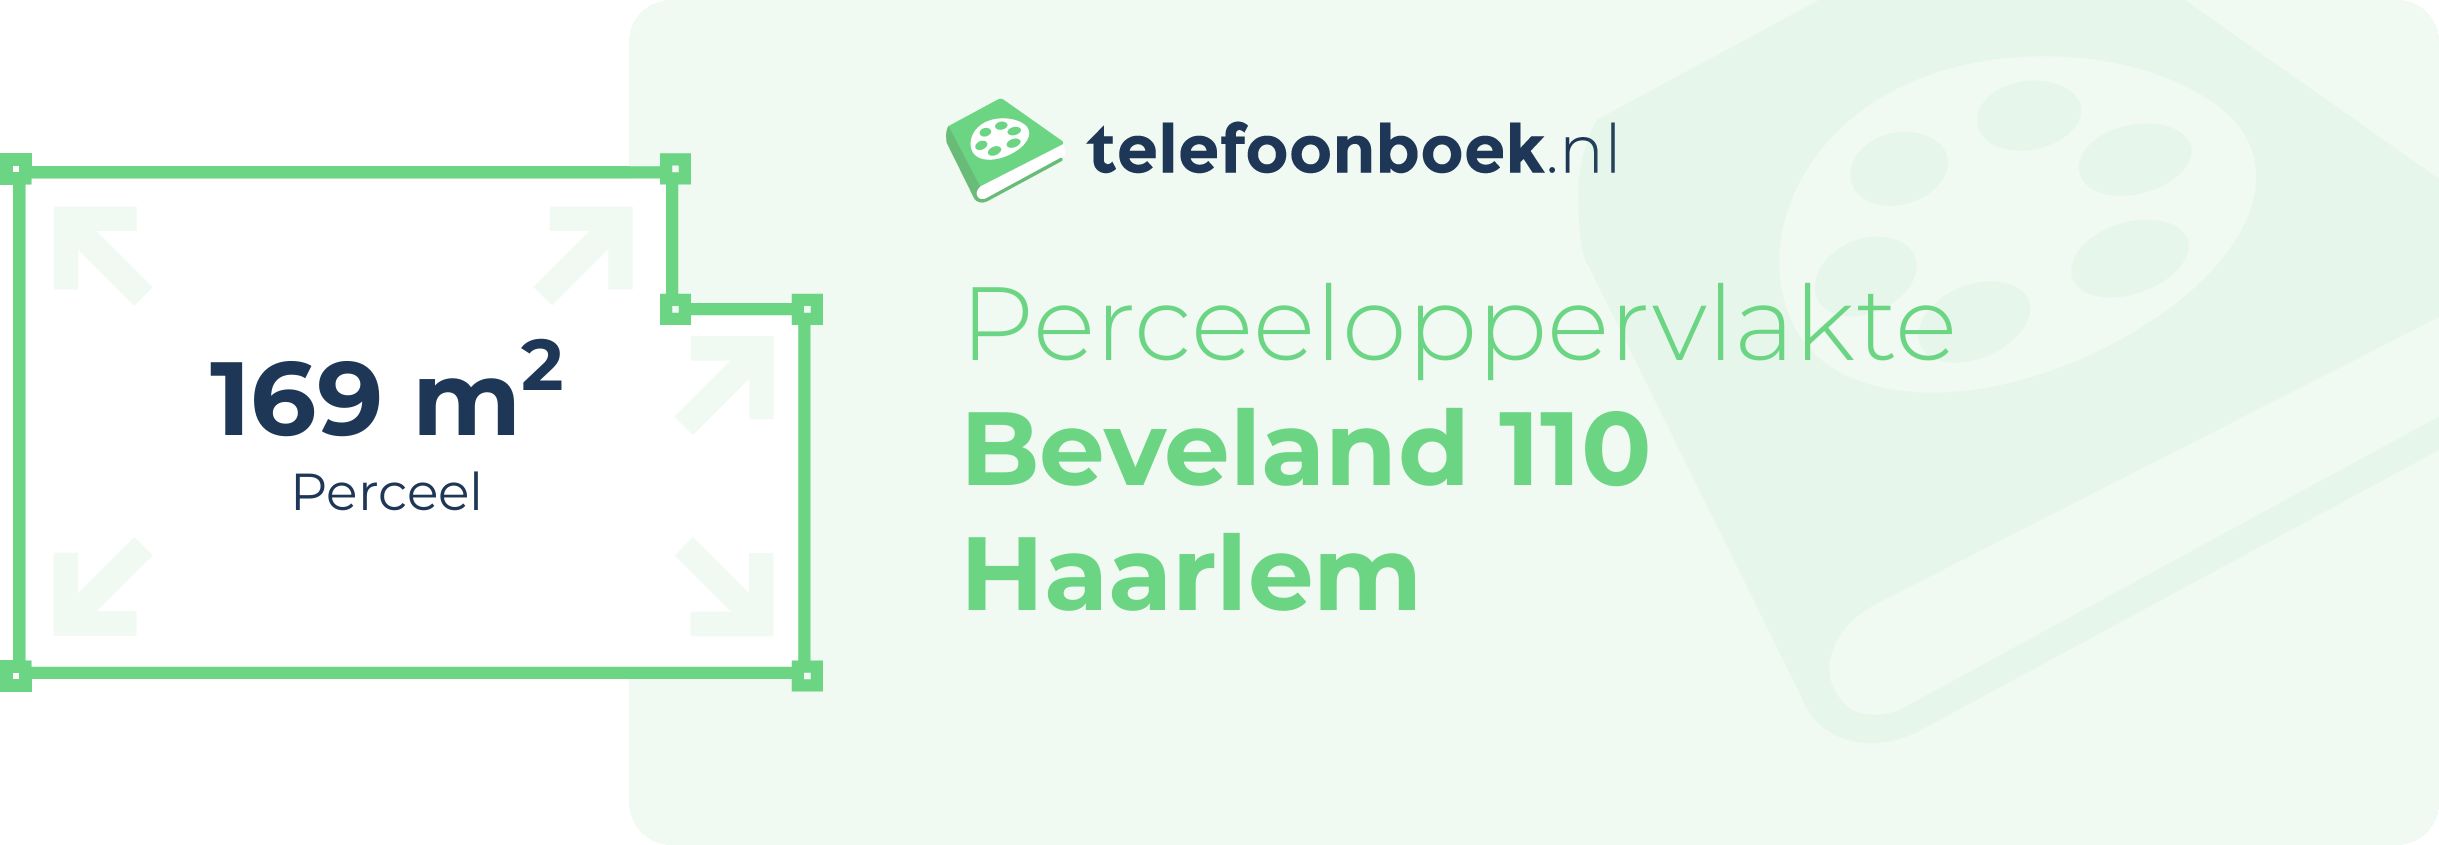 Perceeloppervlakte Beveland 110 Haarlem